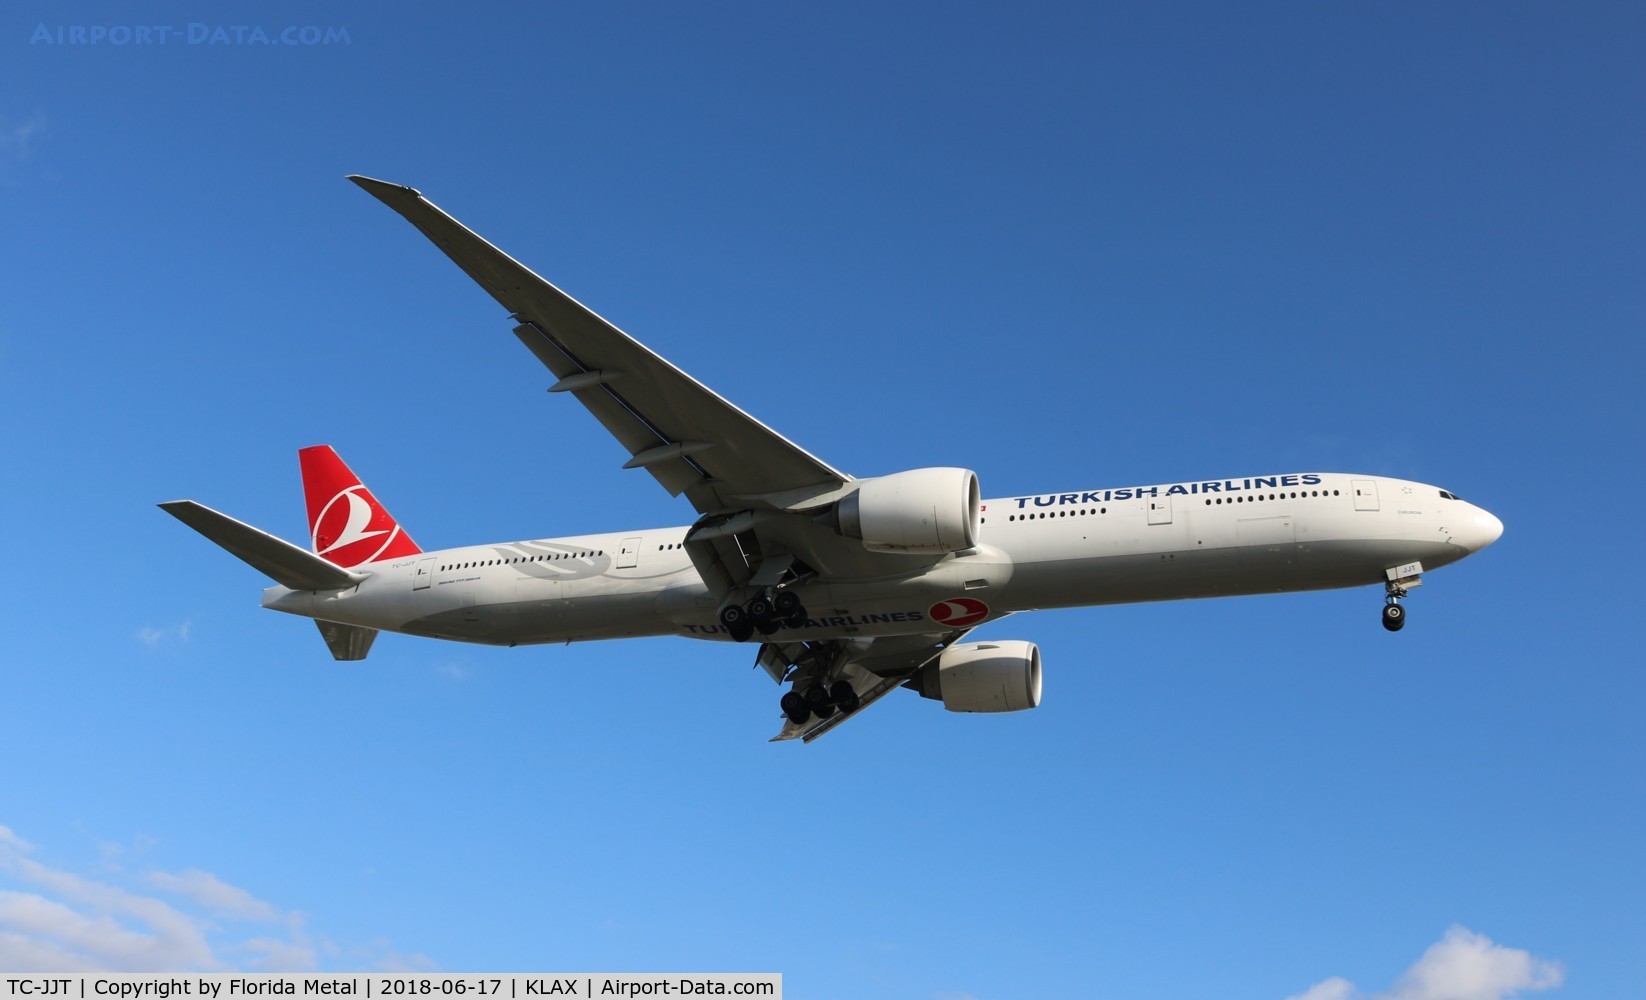 TC-JJT, 2014 Boeing 777-3F2/ER C/N 44118, Turkish